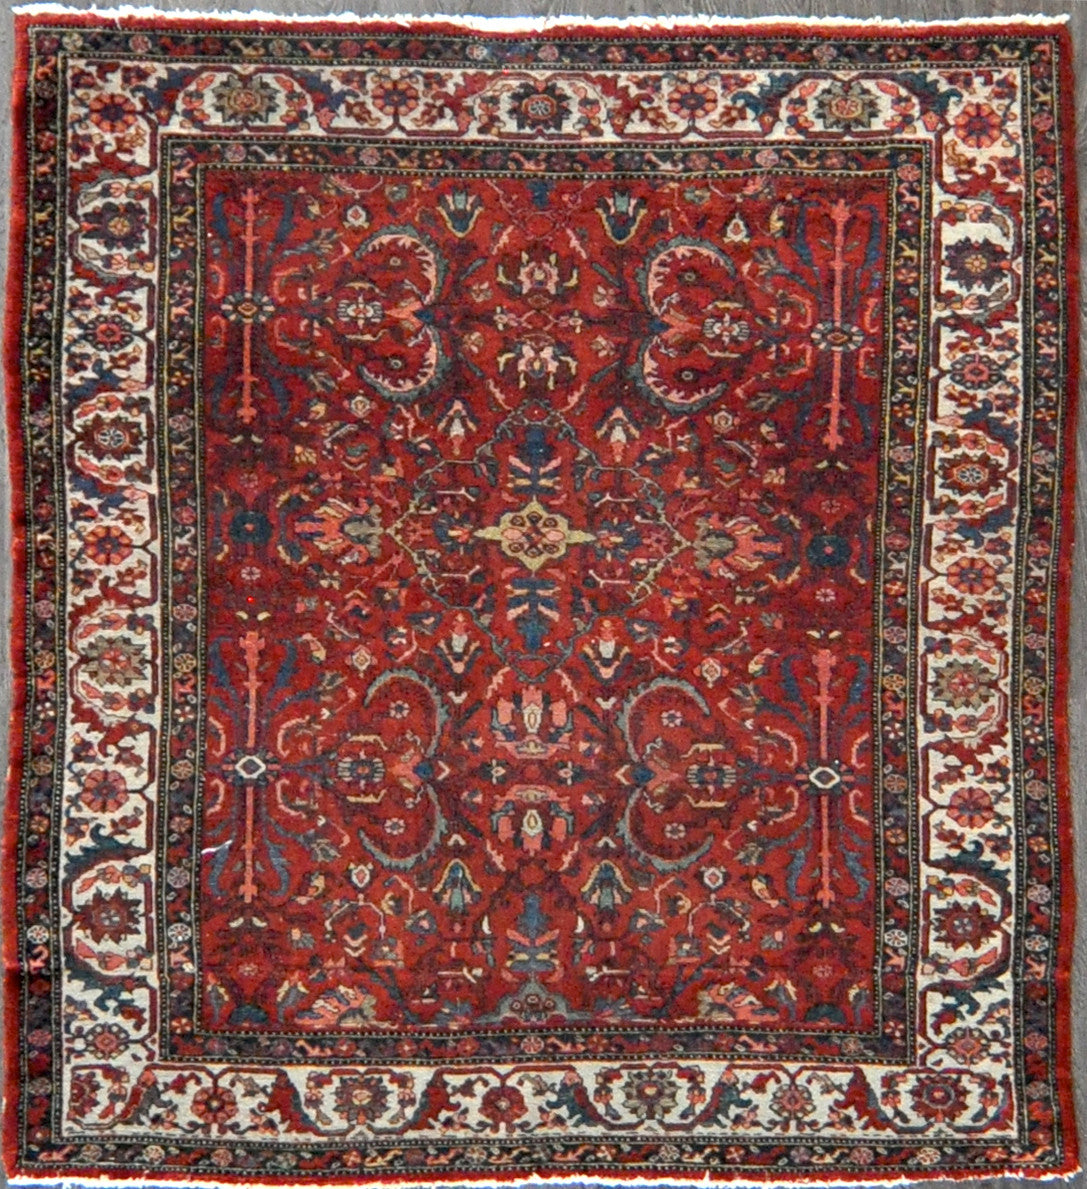 5.5x6.1 Persian antique hamadan #64530